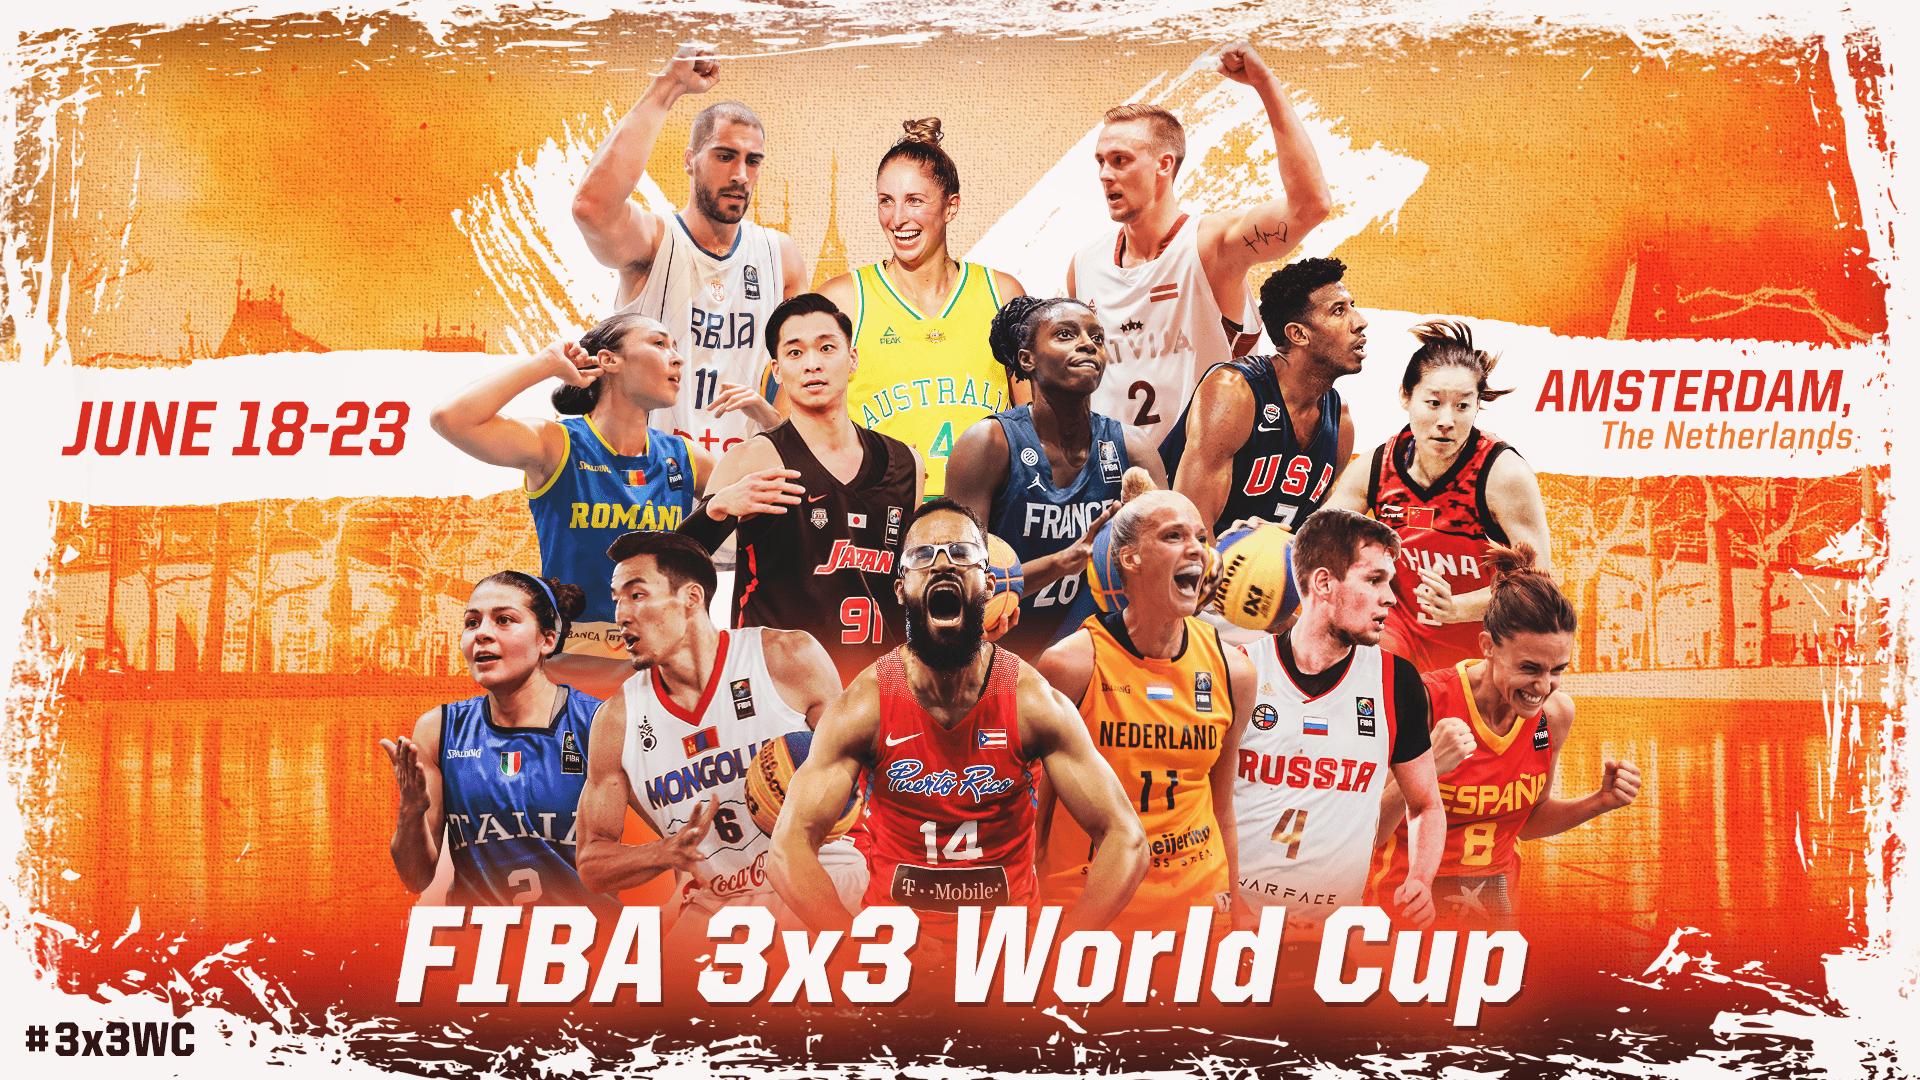 FIBA Basketball World Cup Wallpapers - Wallpaper Cave fiba basketball world cup qualifiers